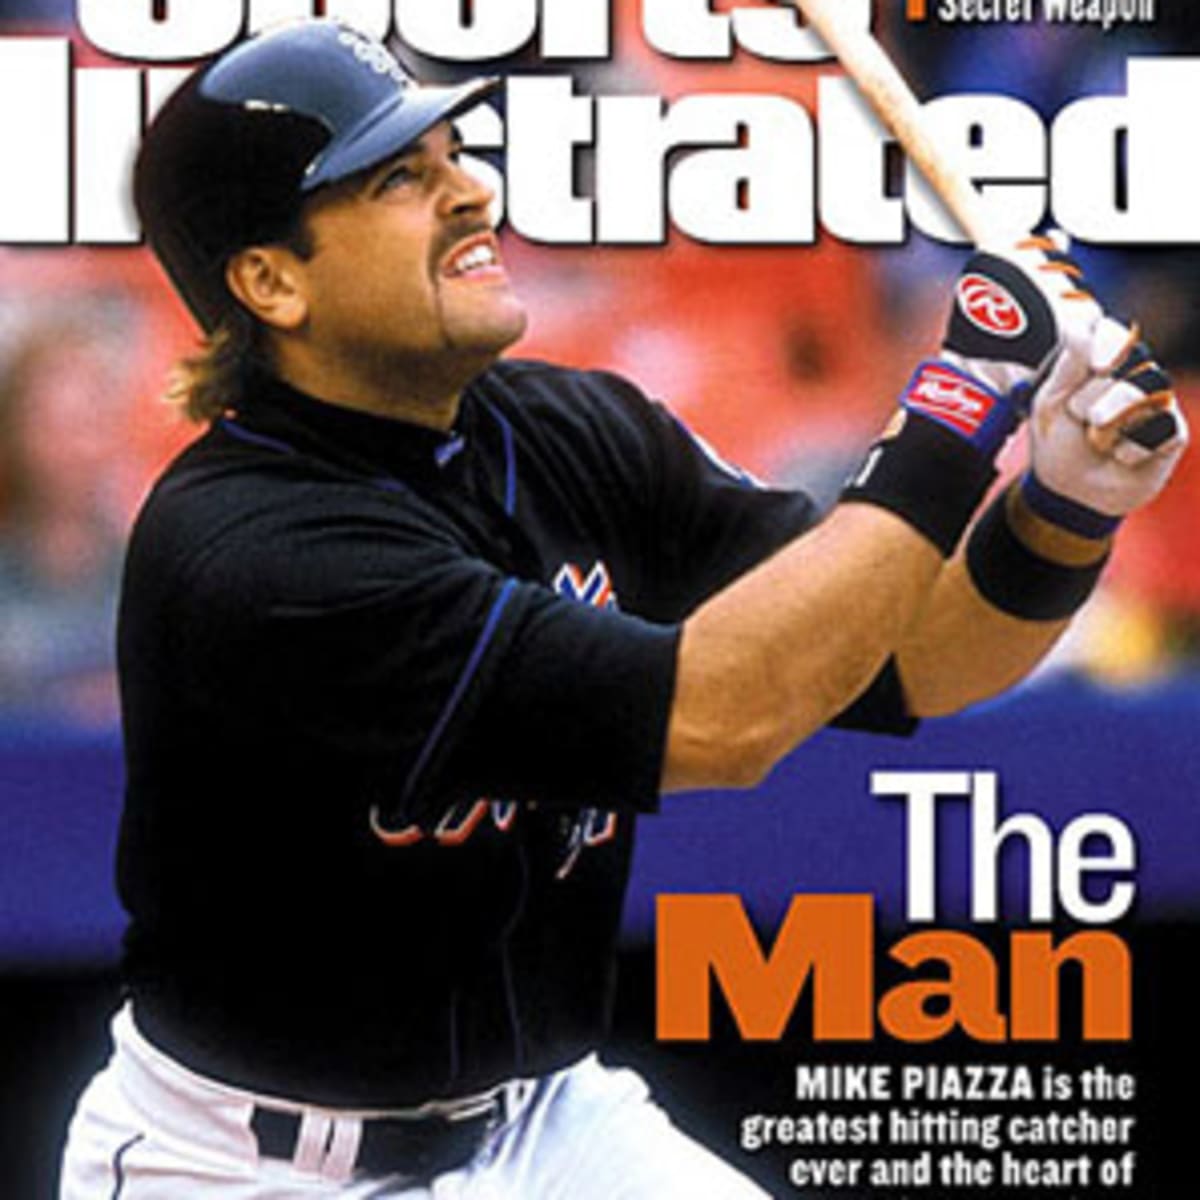 2000 Mike Piazza World Series Game Worn Cap. Few baseball fans